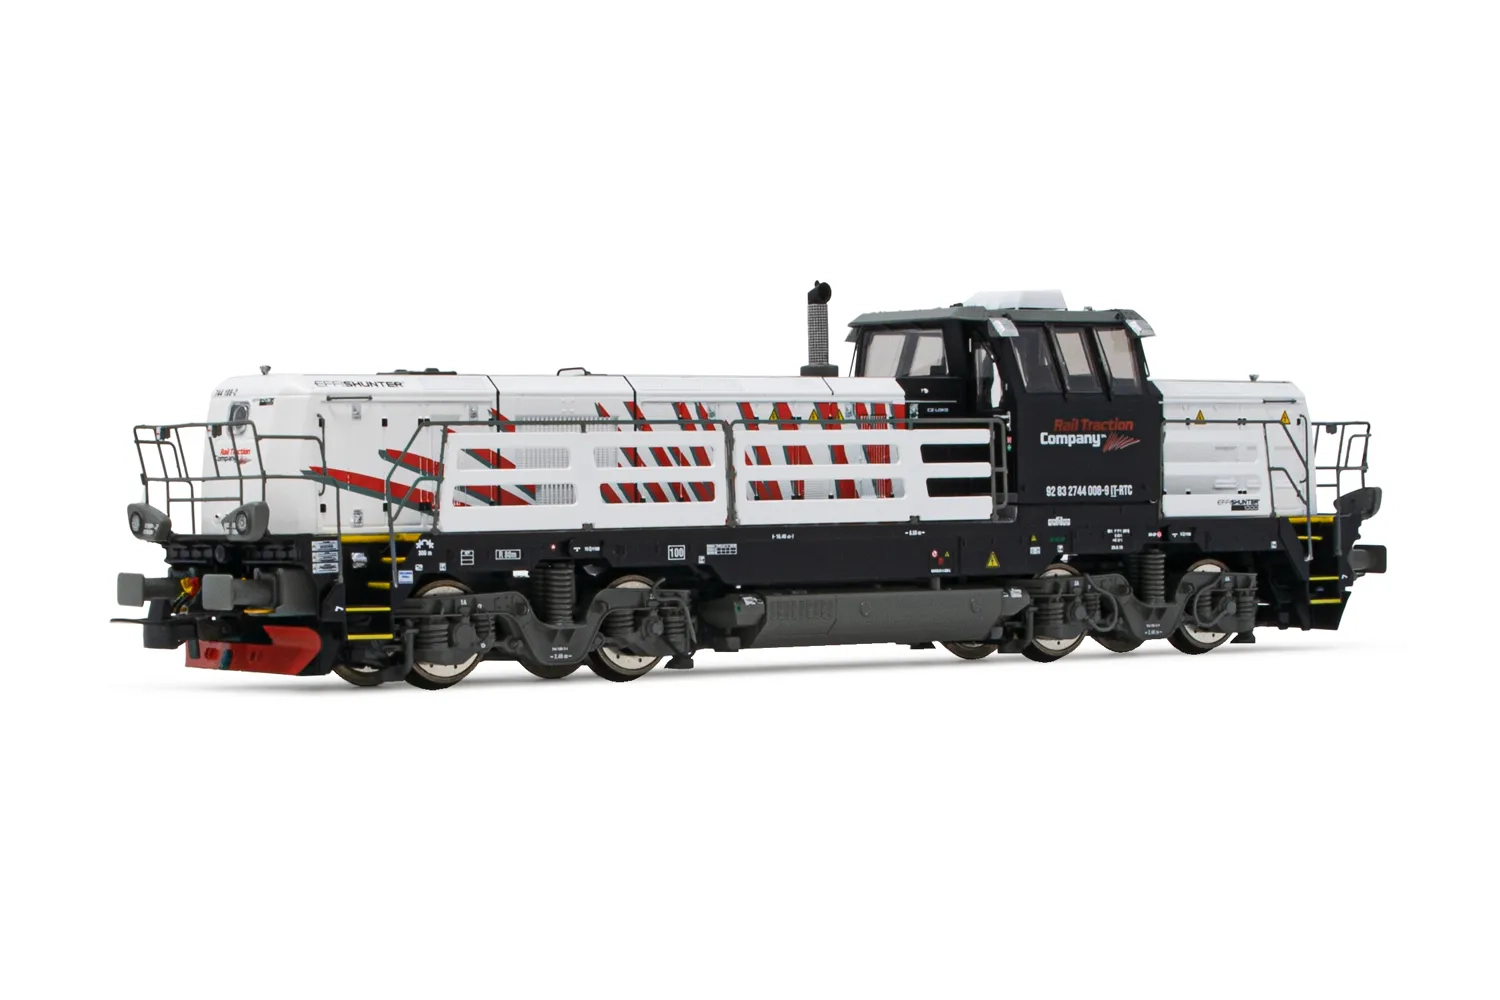 Rail Traction Company, locomotiva diesel da manovra EffiShunter 1000, livrea bianca/nera, ep. VI